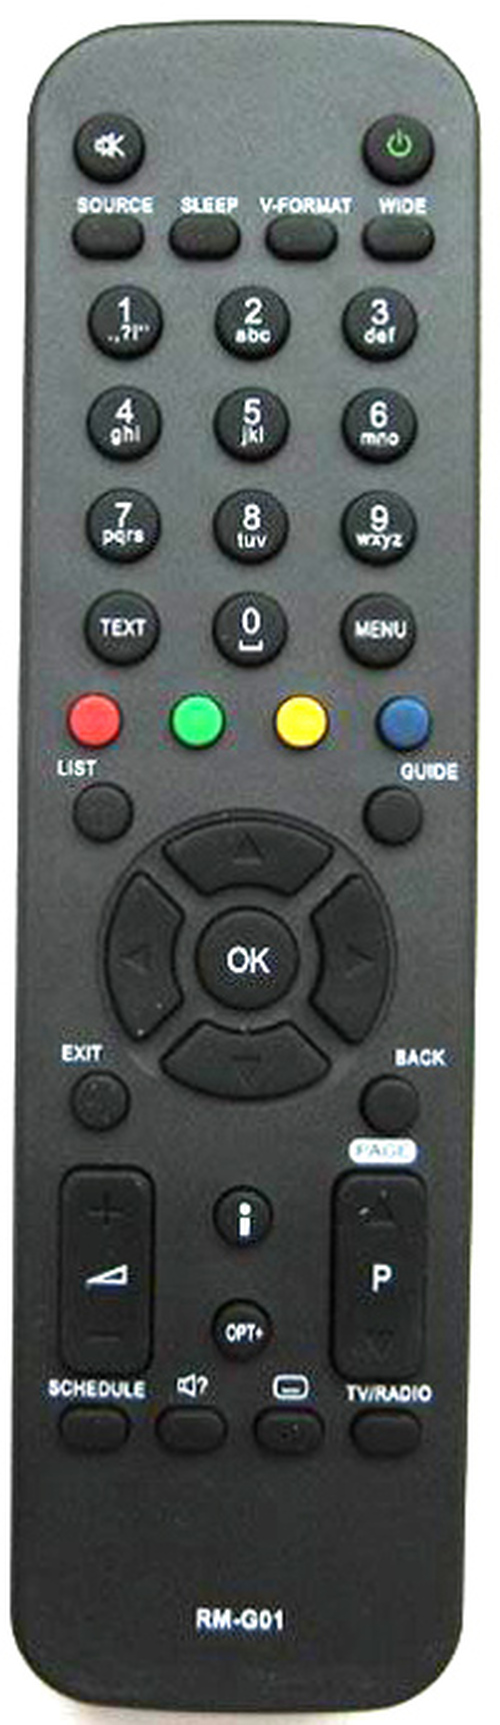 Пульт дистанционного управления для ТВ-приставки HUMAX RM-G01 НТВ+